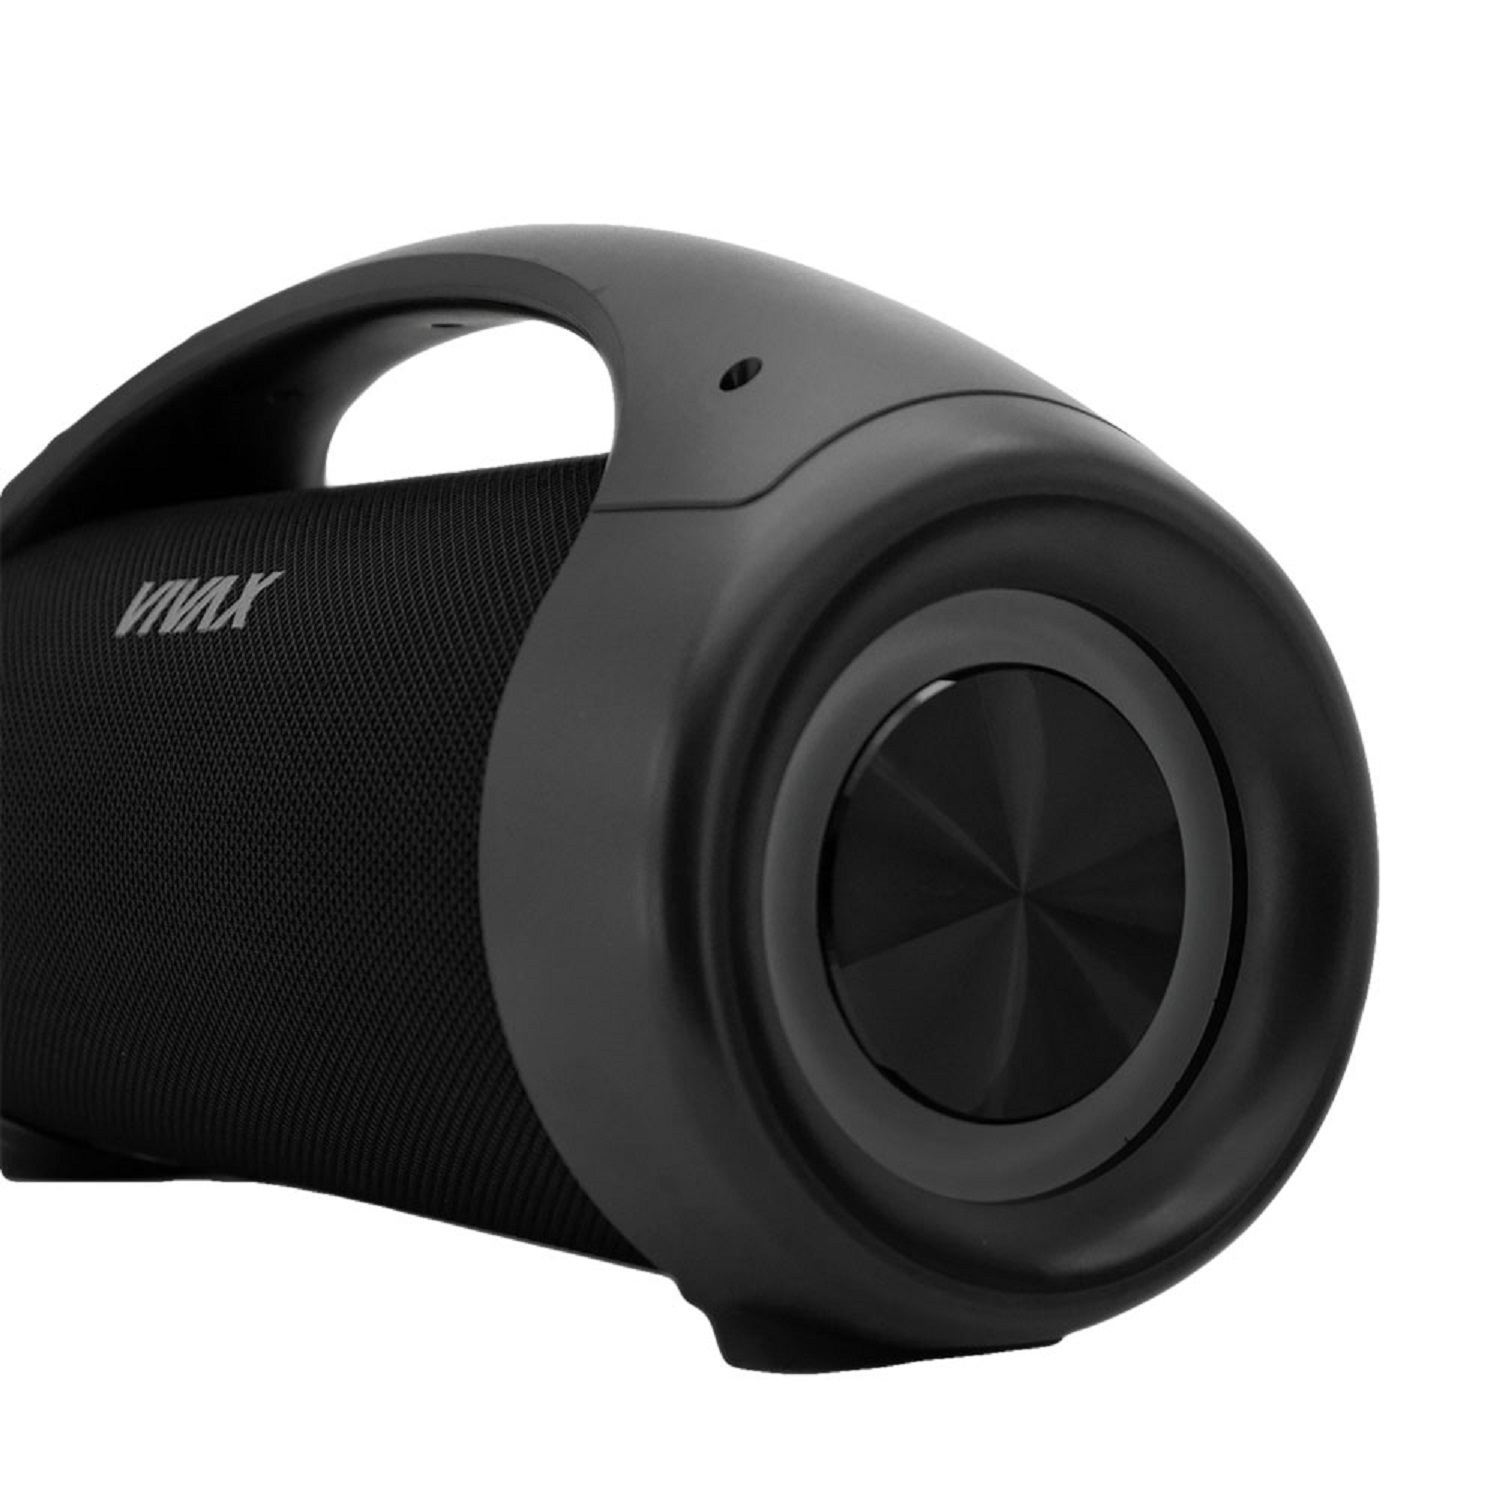 schwarz Bluetooth-Lautsprecher, VIVAX BS-210